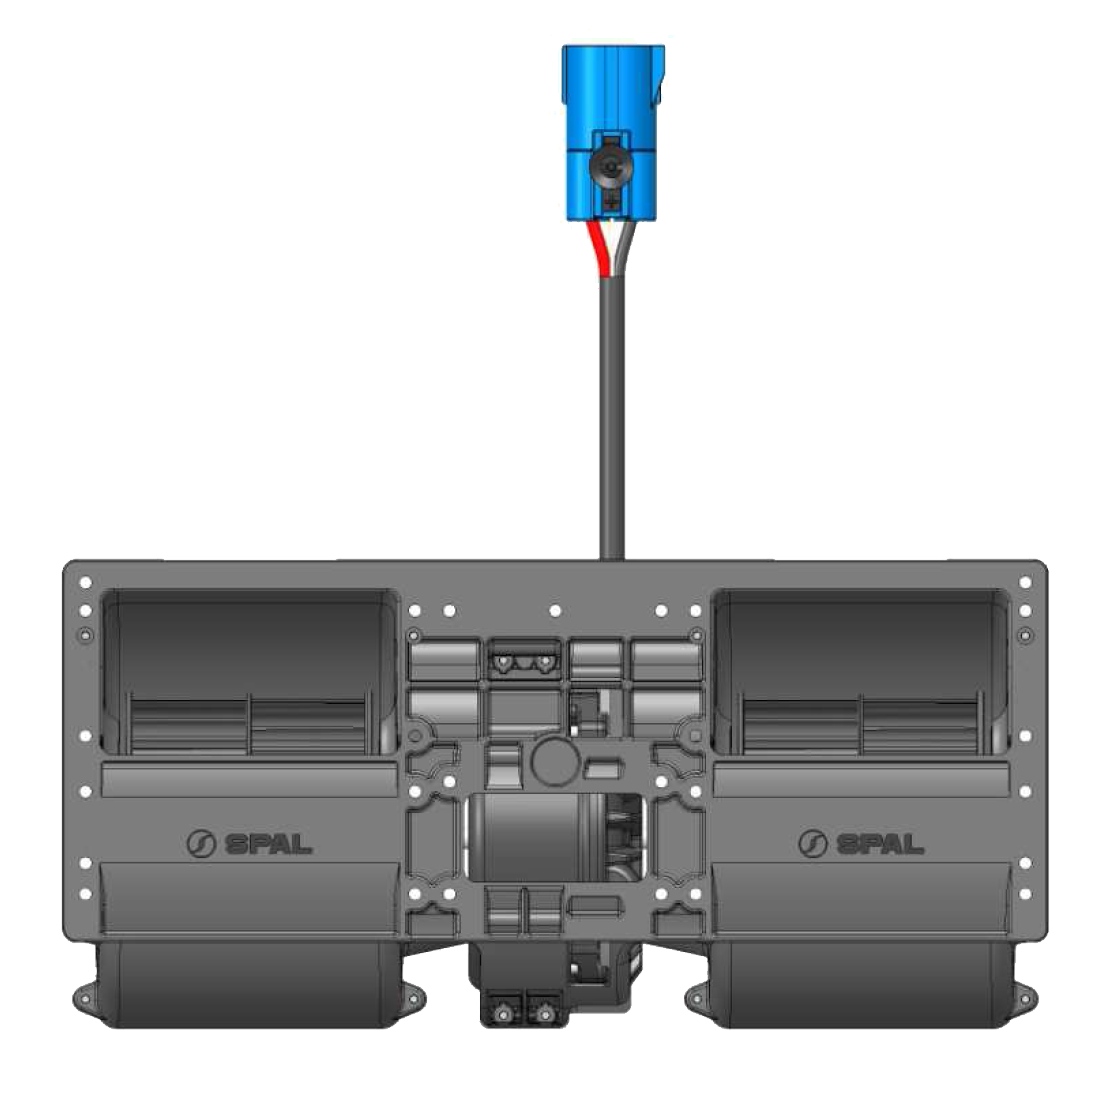 NMB MAT 3110RL-04W-B20 Axiallüfter Lüfter Ventilator 12V 80x80x25mm